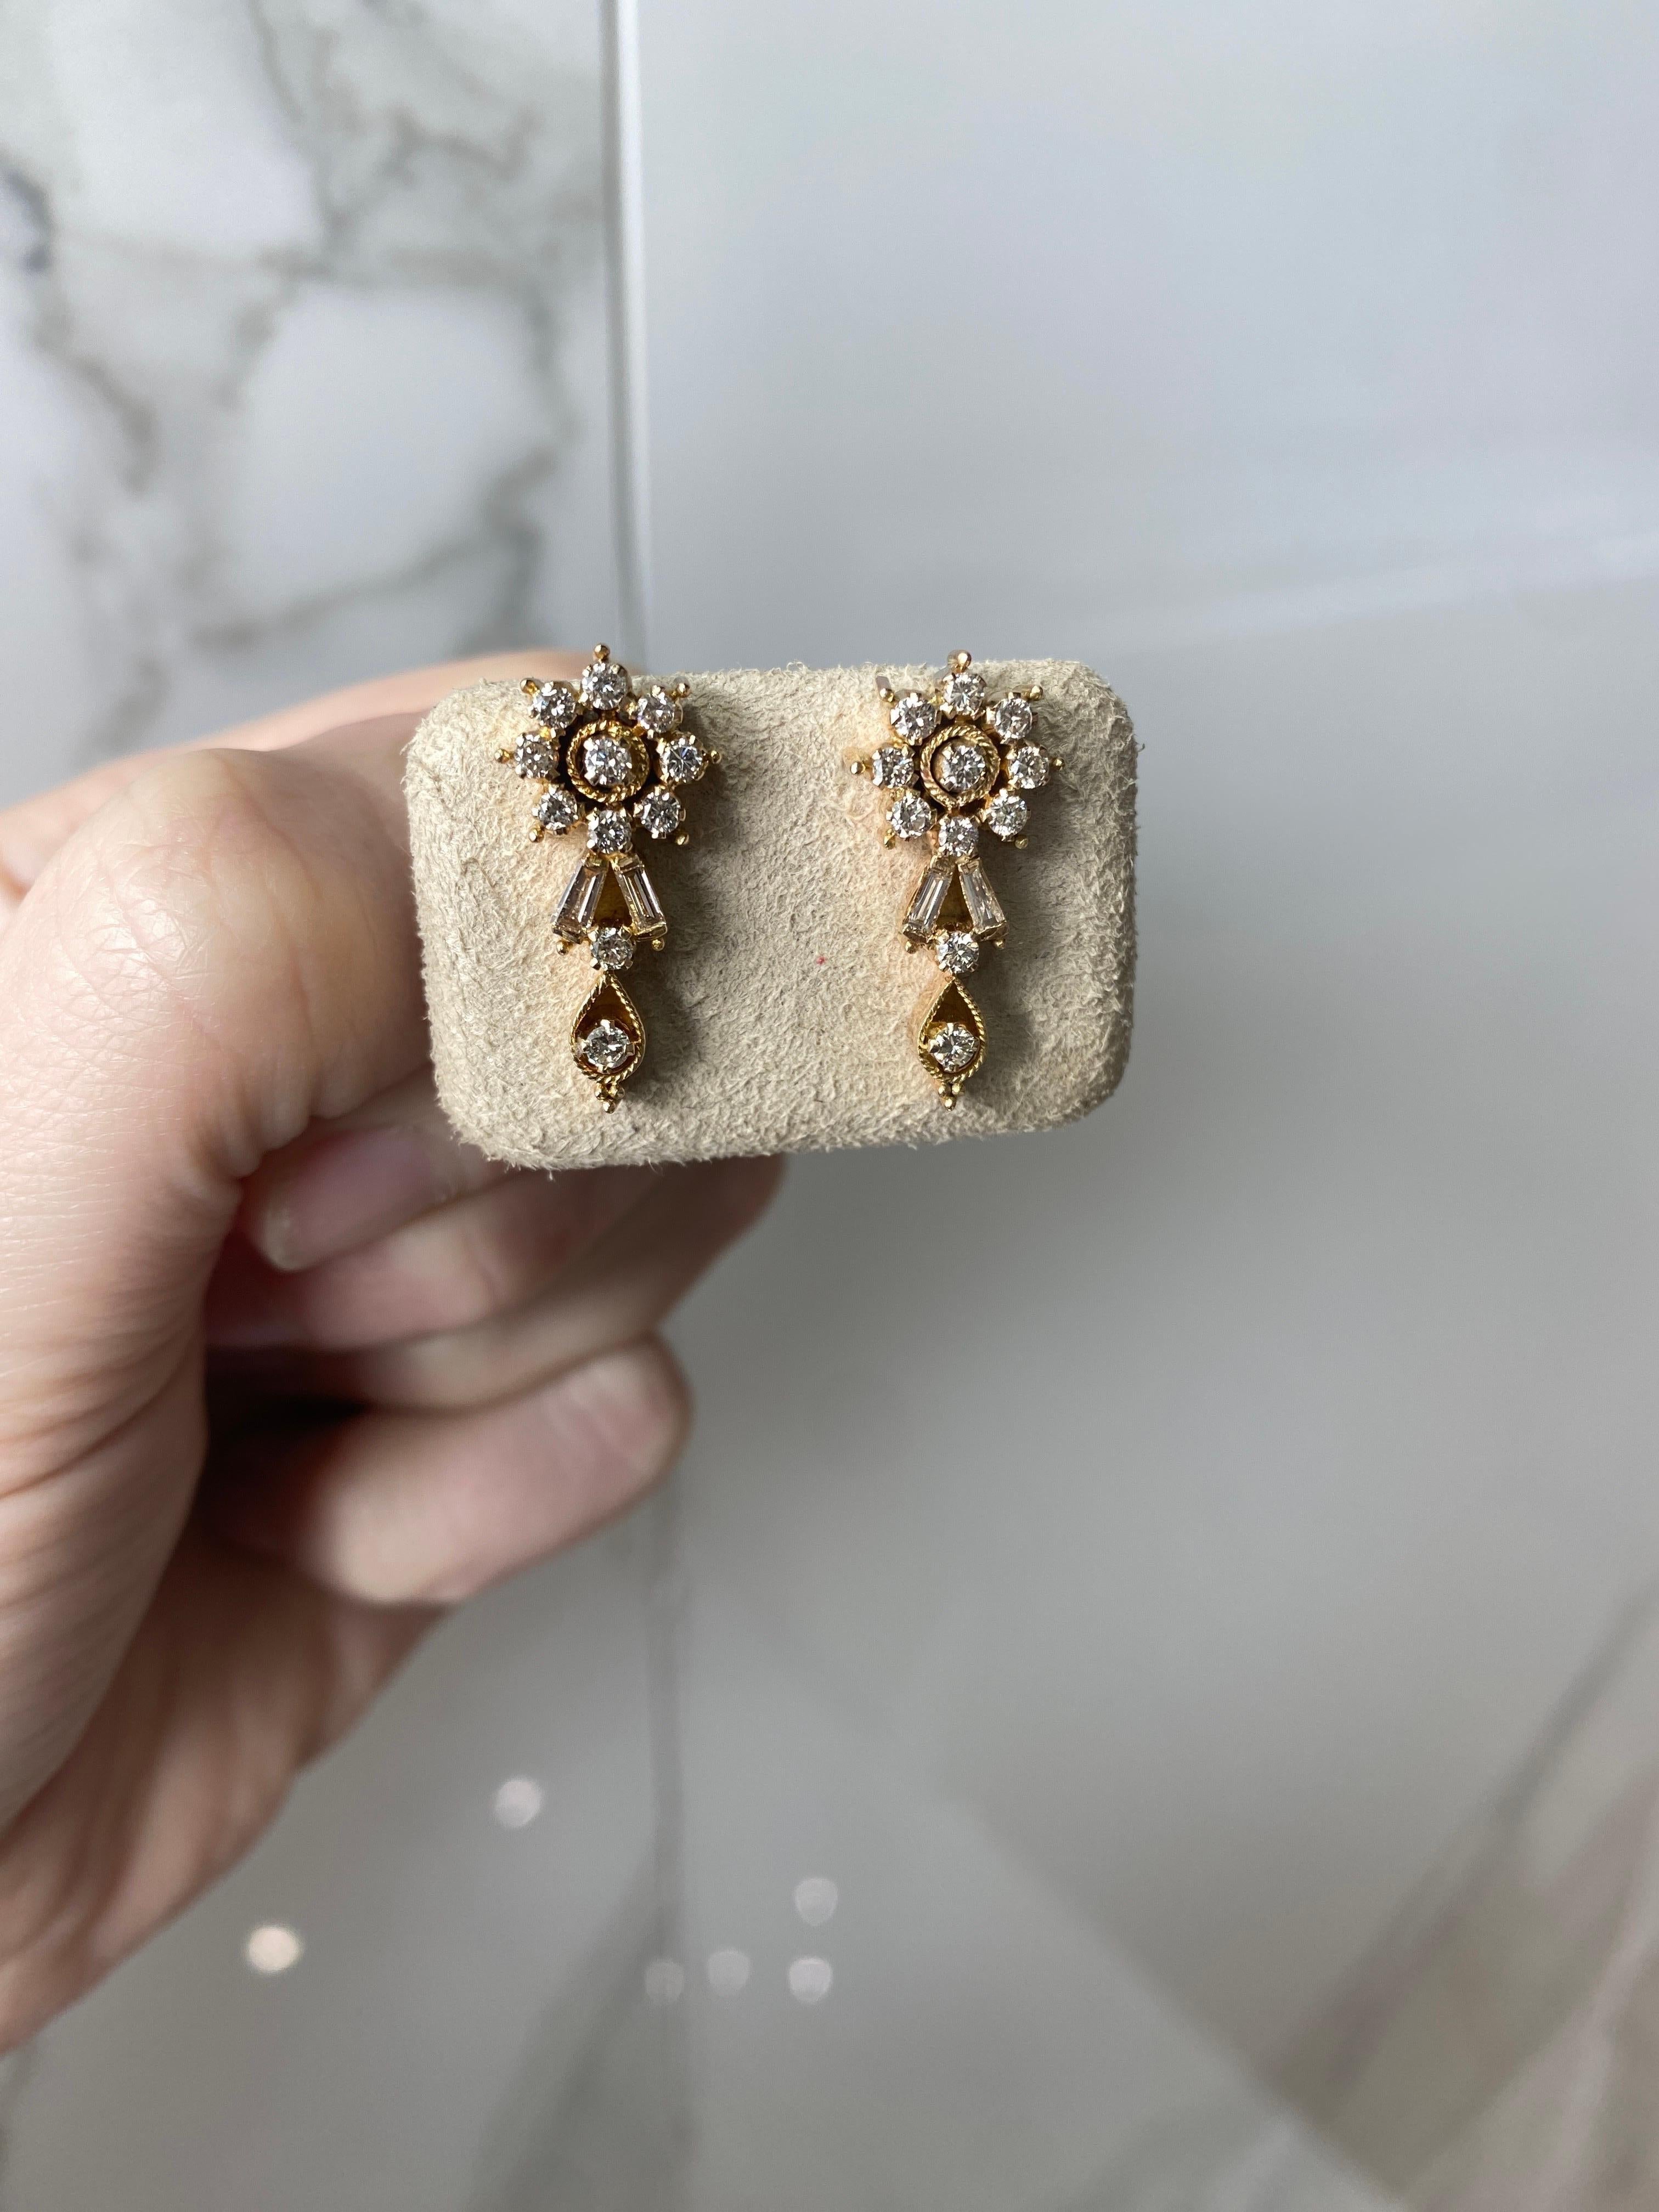 Flower Motif Diamond Earrings In New Condition For Sale In Houston, TX